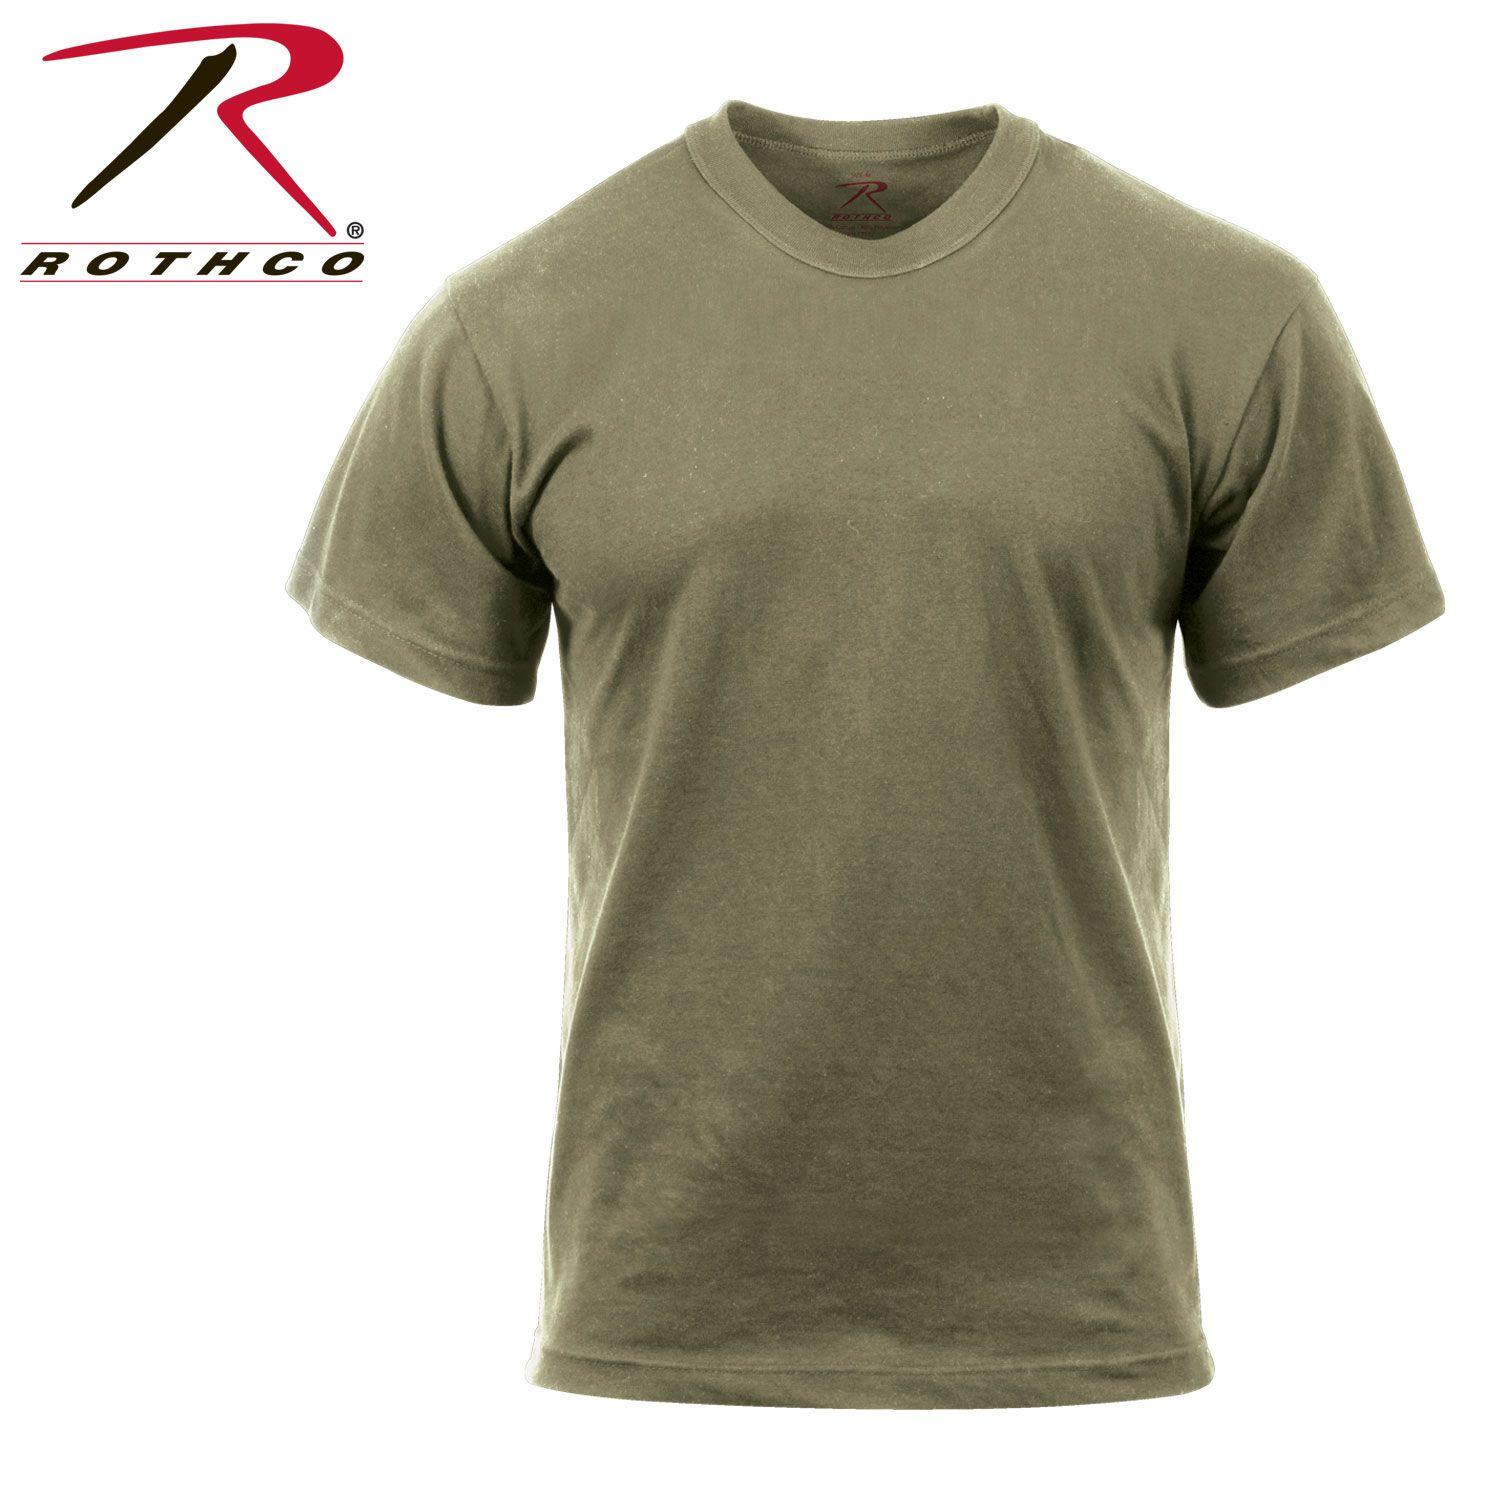 Coyote Clothing Logo - Rothco AR 670 1 Coyote T Shirt